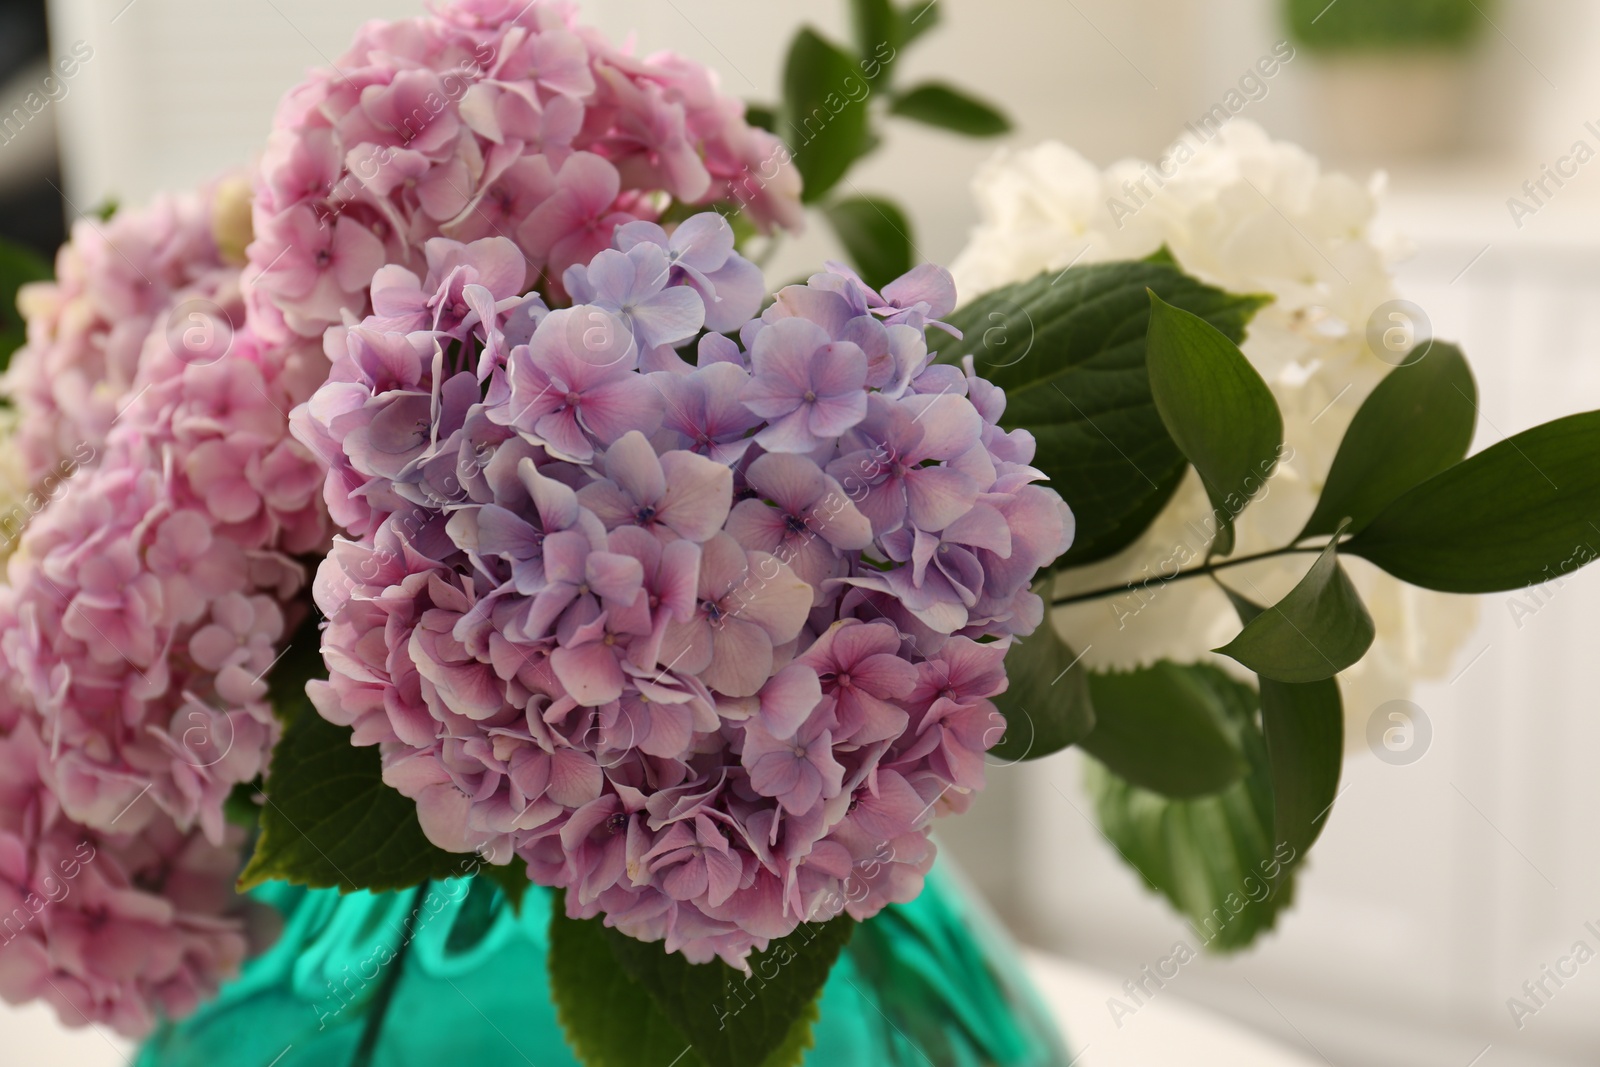 Photo of Bouquet of beautiful hydrangea flowers in vase indoors, closeup